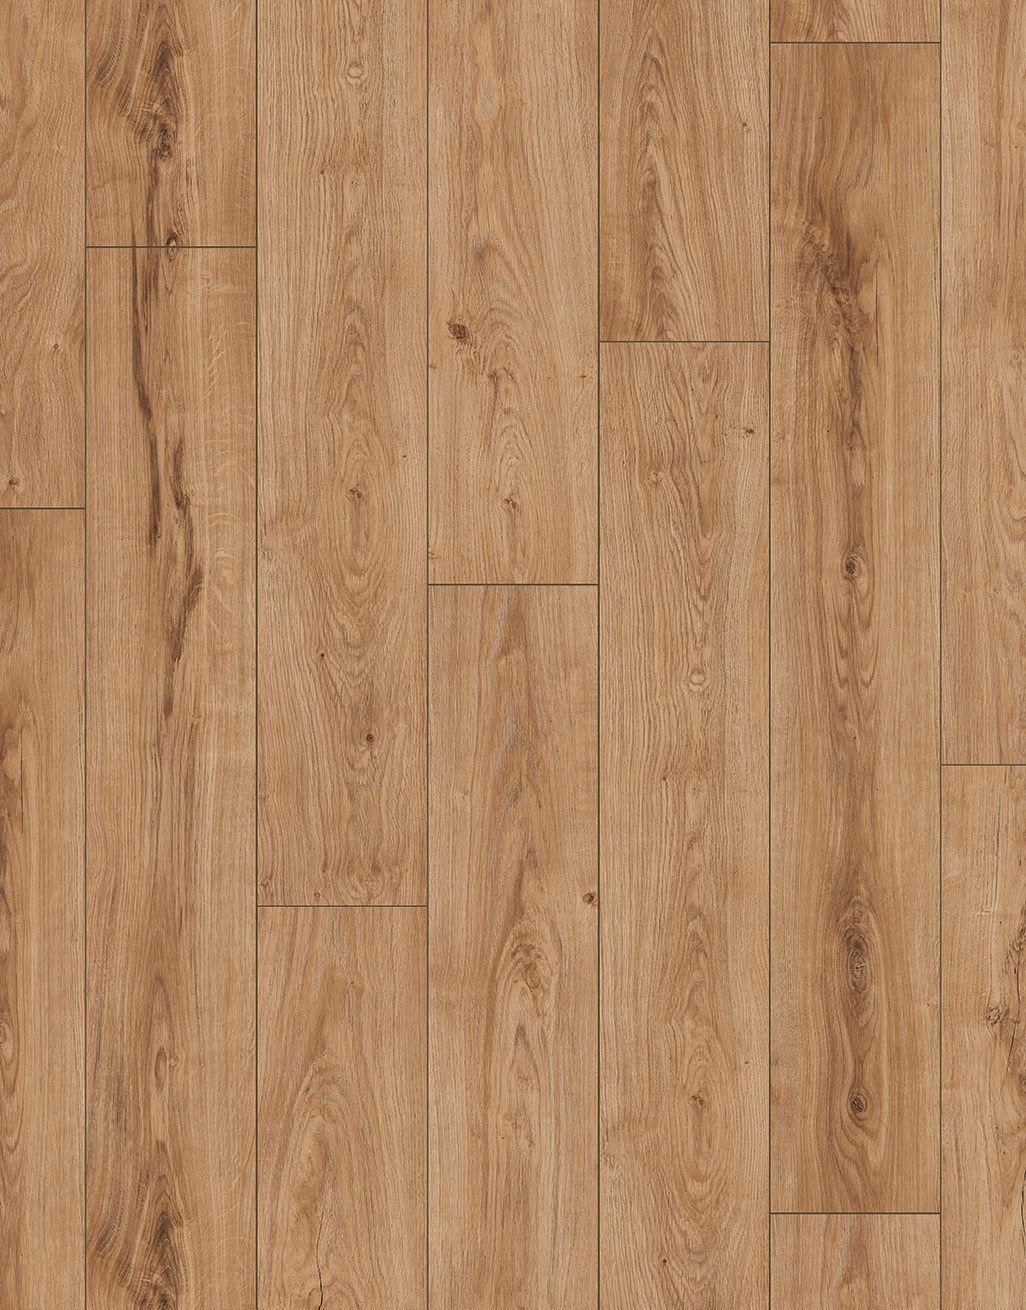 Tips for choosing wooden laminate
flooring